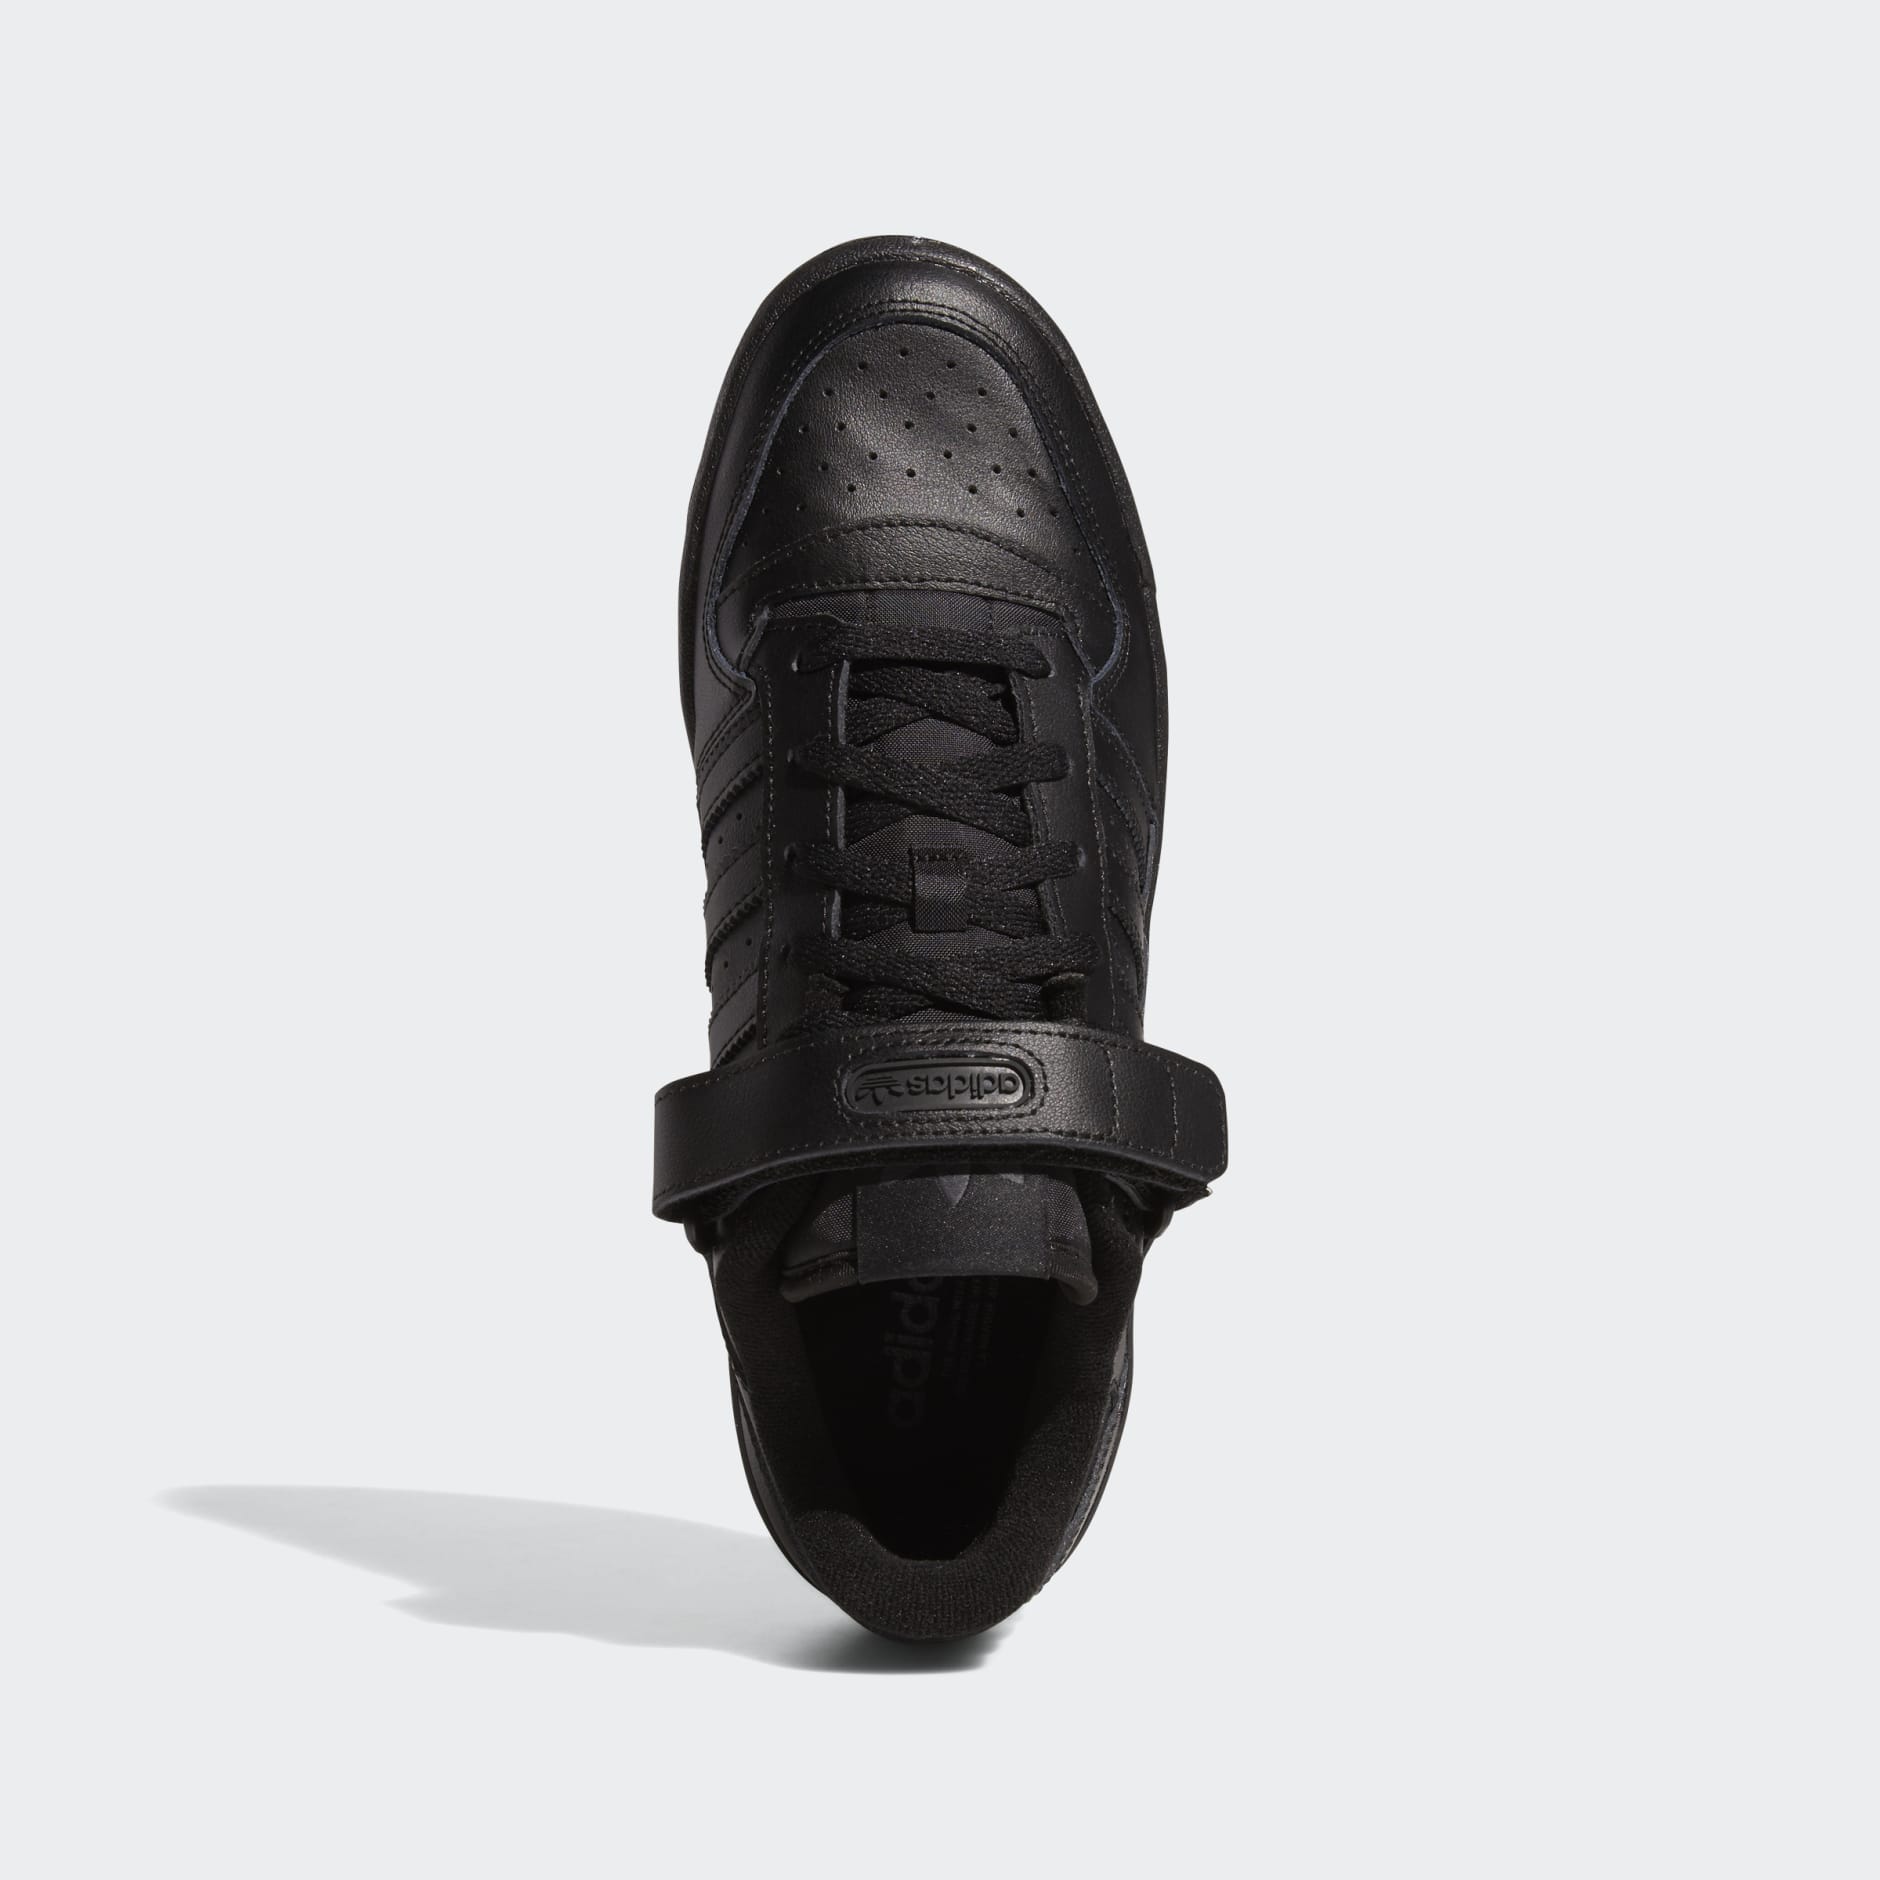 comedia Sano asesino Men's Shoes - Forum Low Shoes - Black | adidas Saudi Arabia